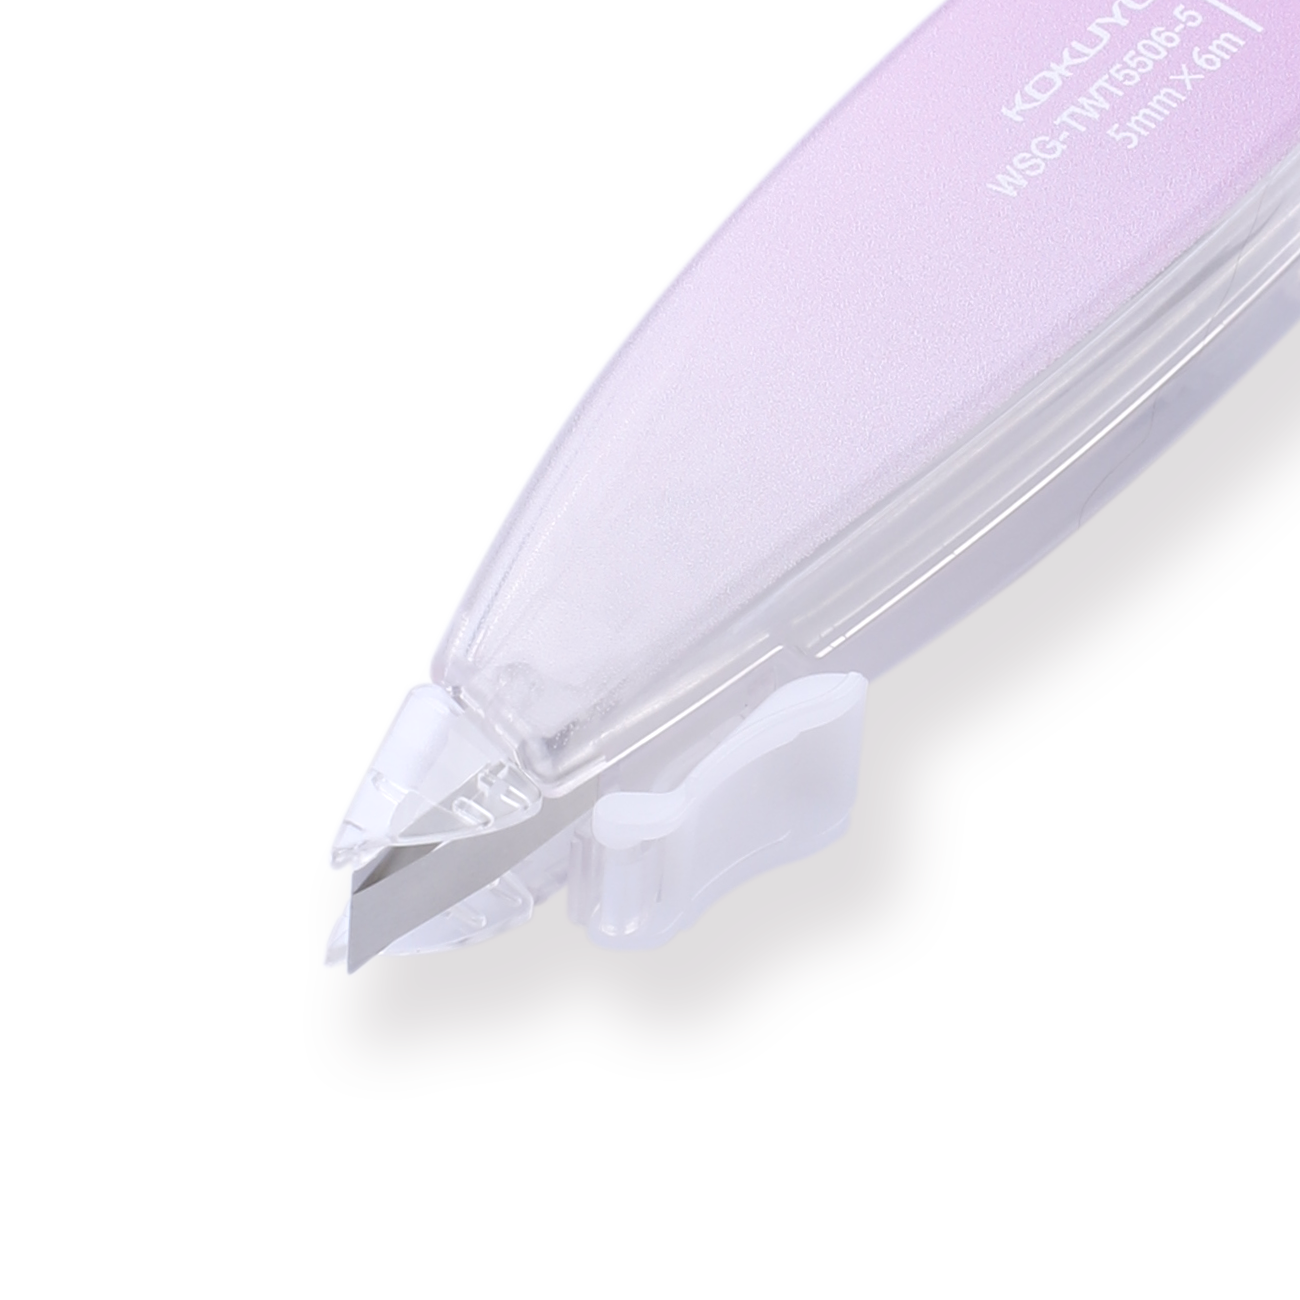 Kokuyo Campus Refillable Pen Correction Tape - Purple